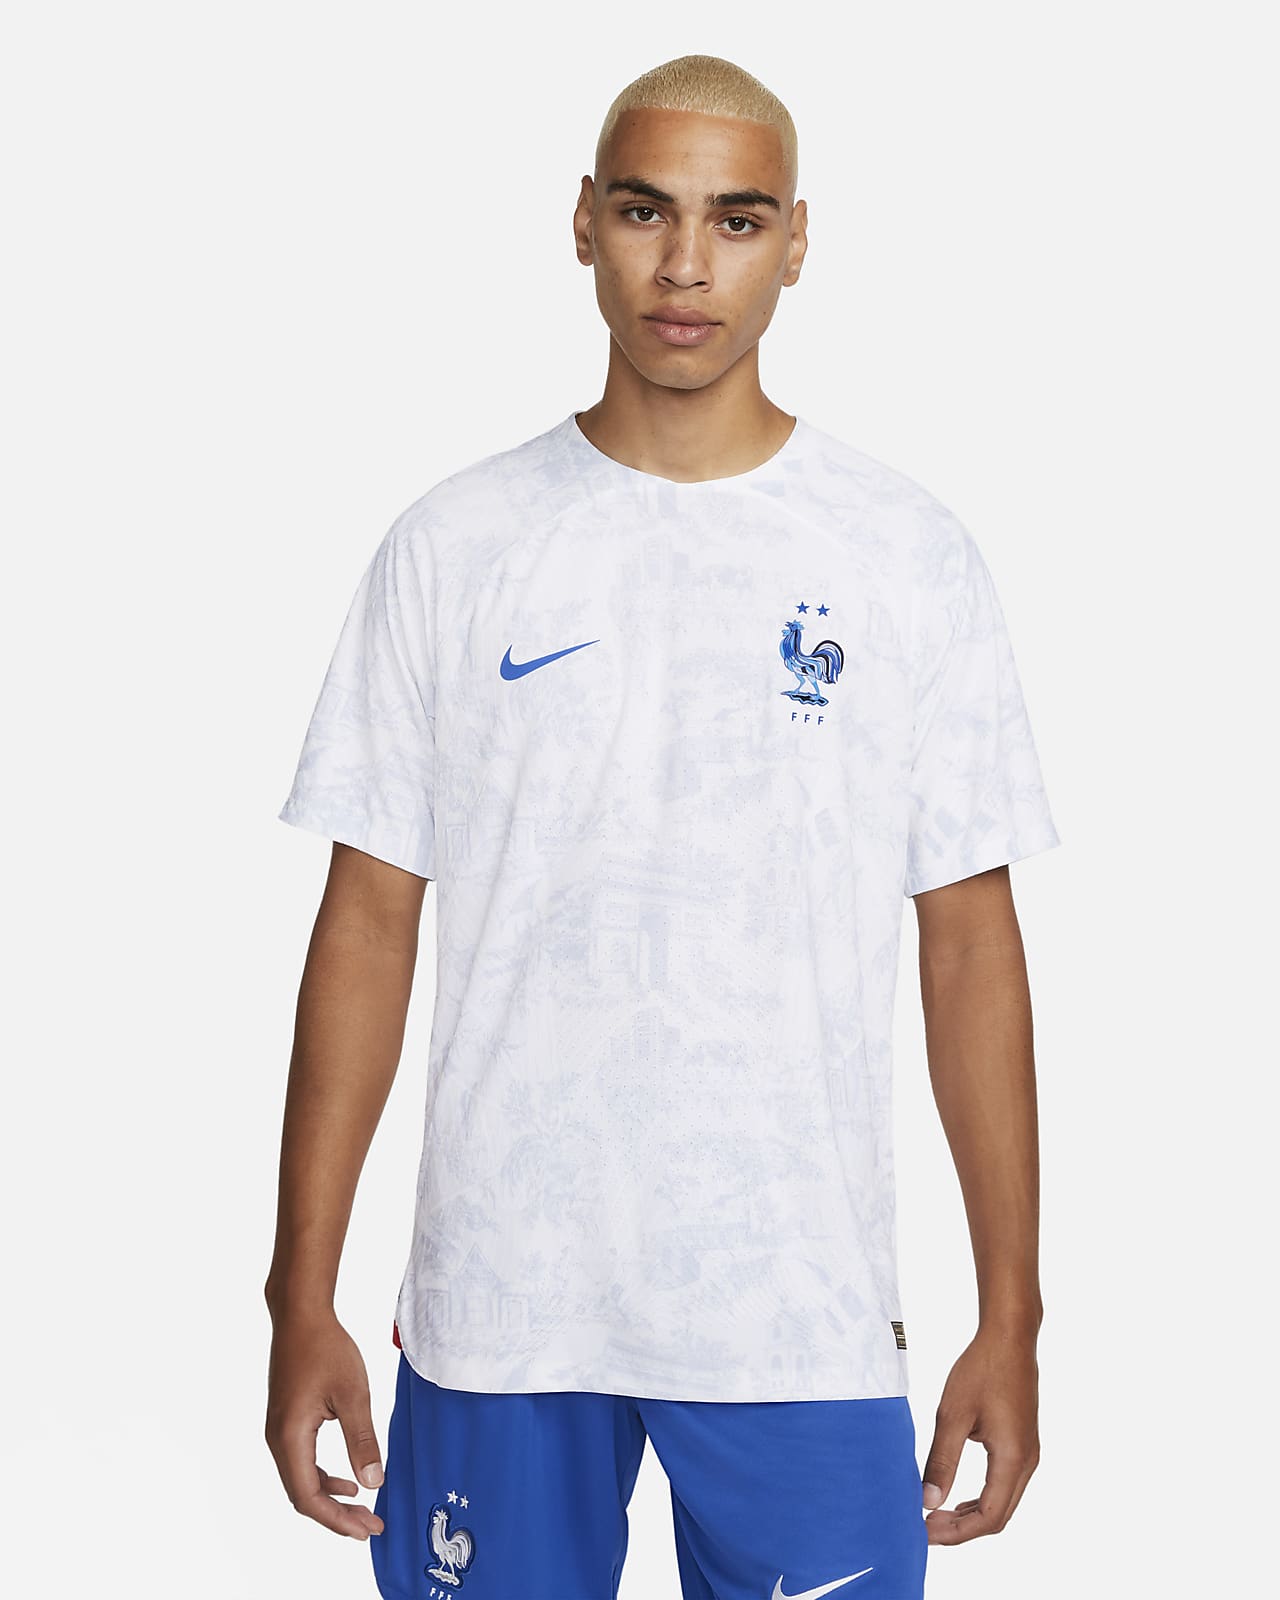 France National Team Nike Basketball Jersey - White